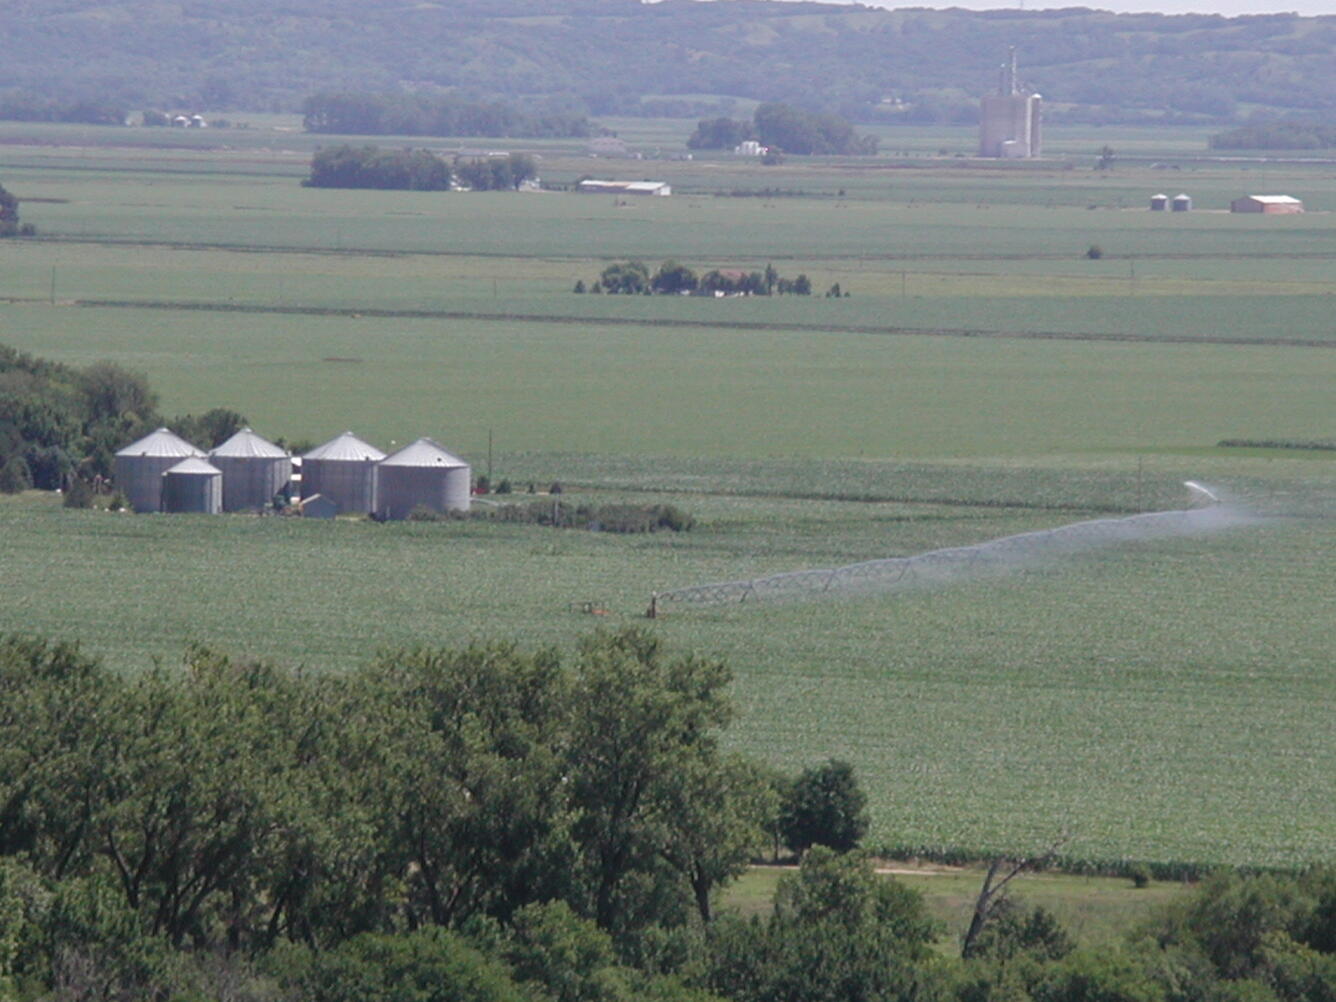 A view of a farm field in Iowa